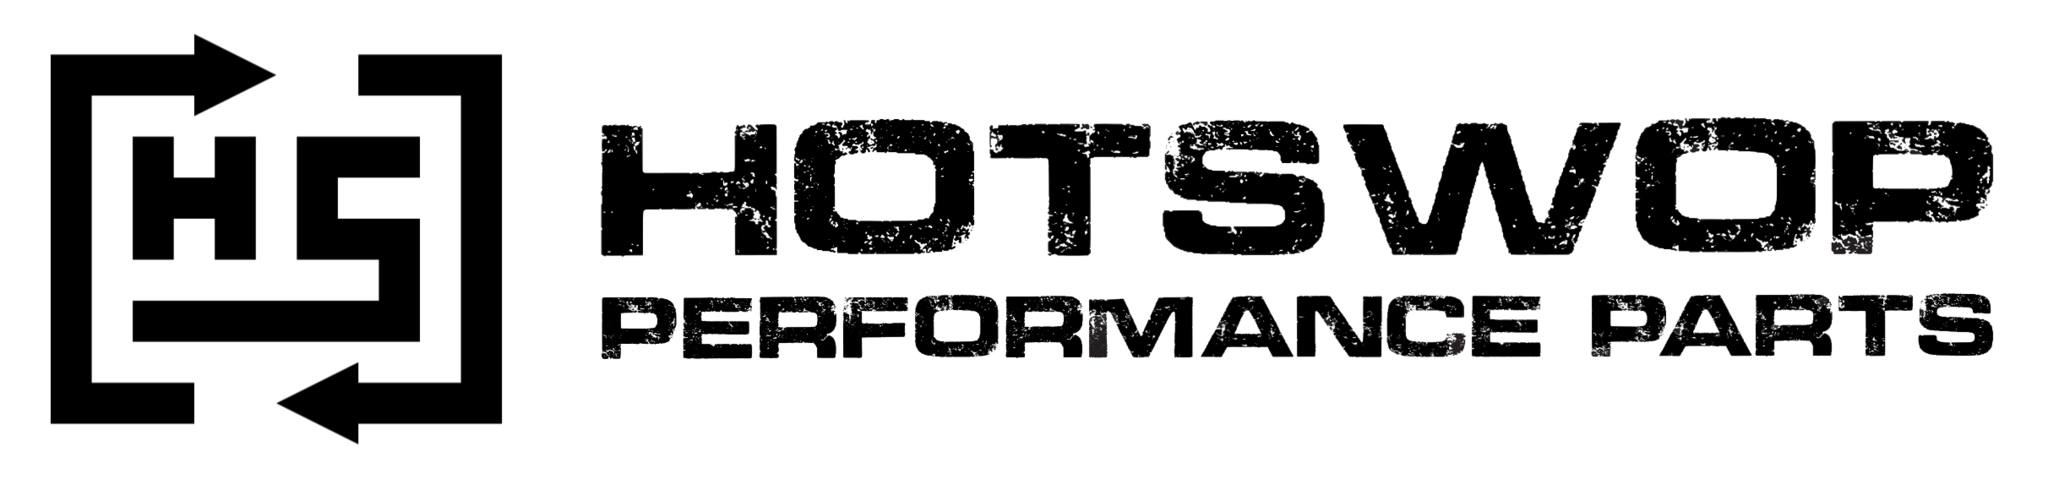 HotSwop Performance Parts PRO Basic Part License Plate Holder